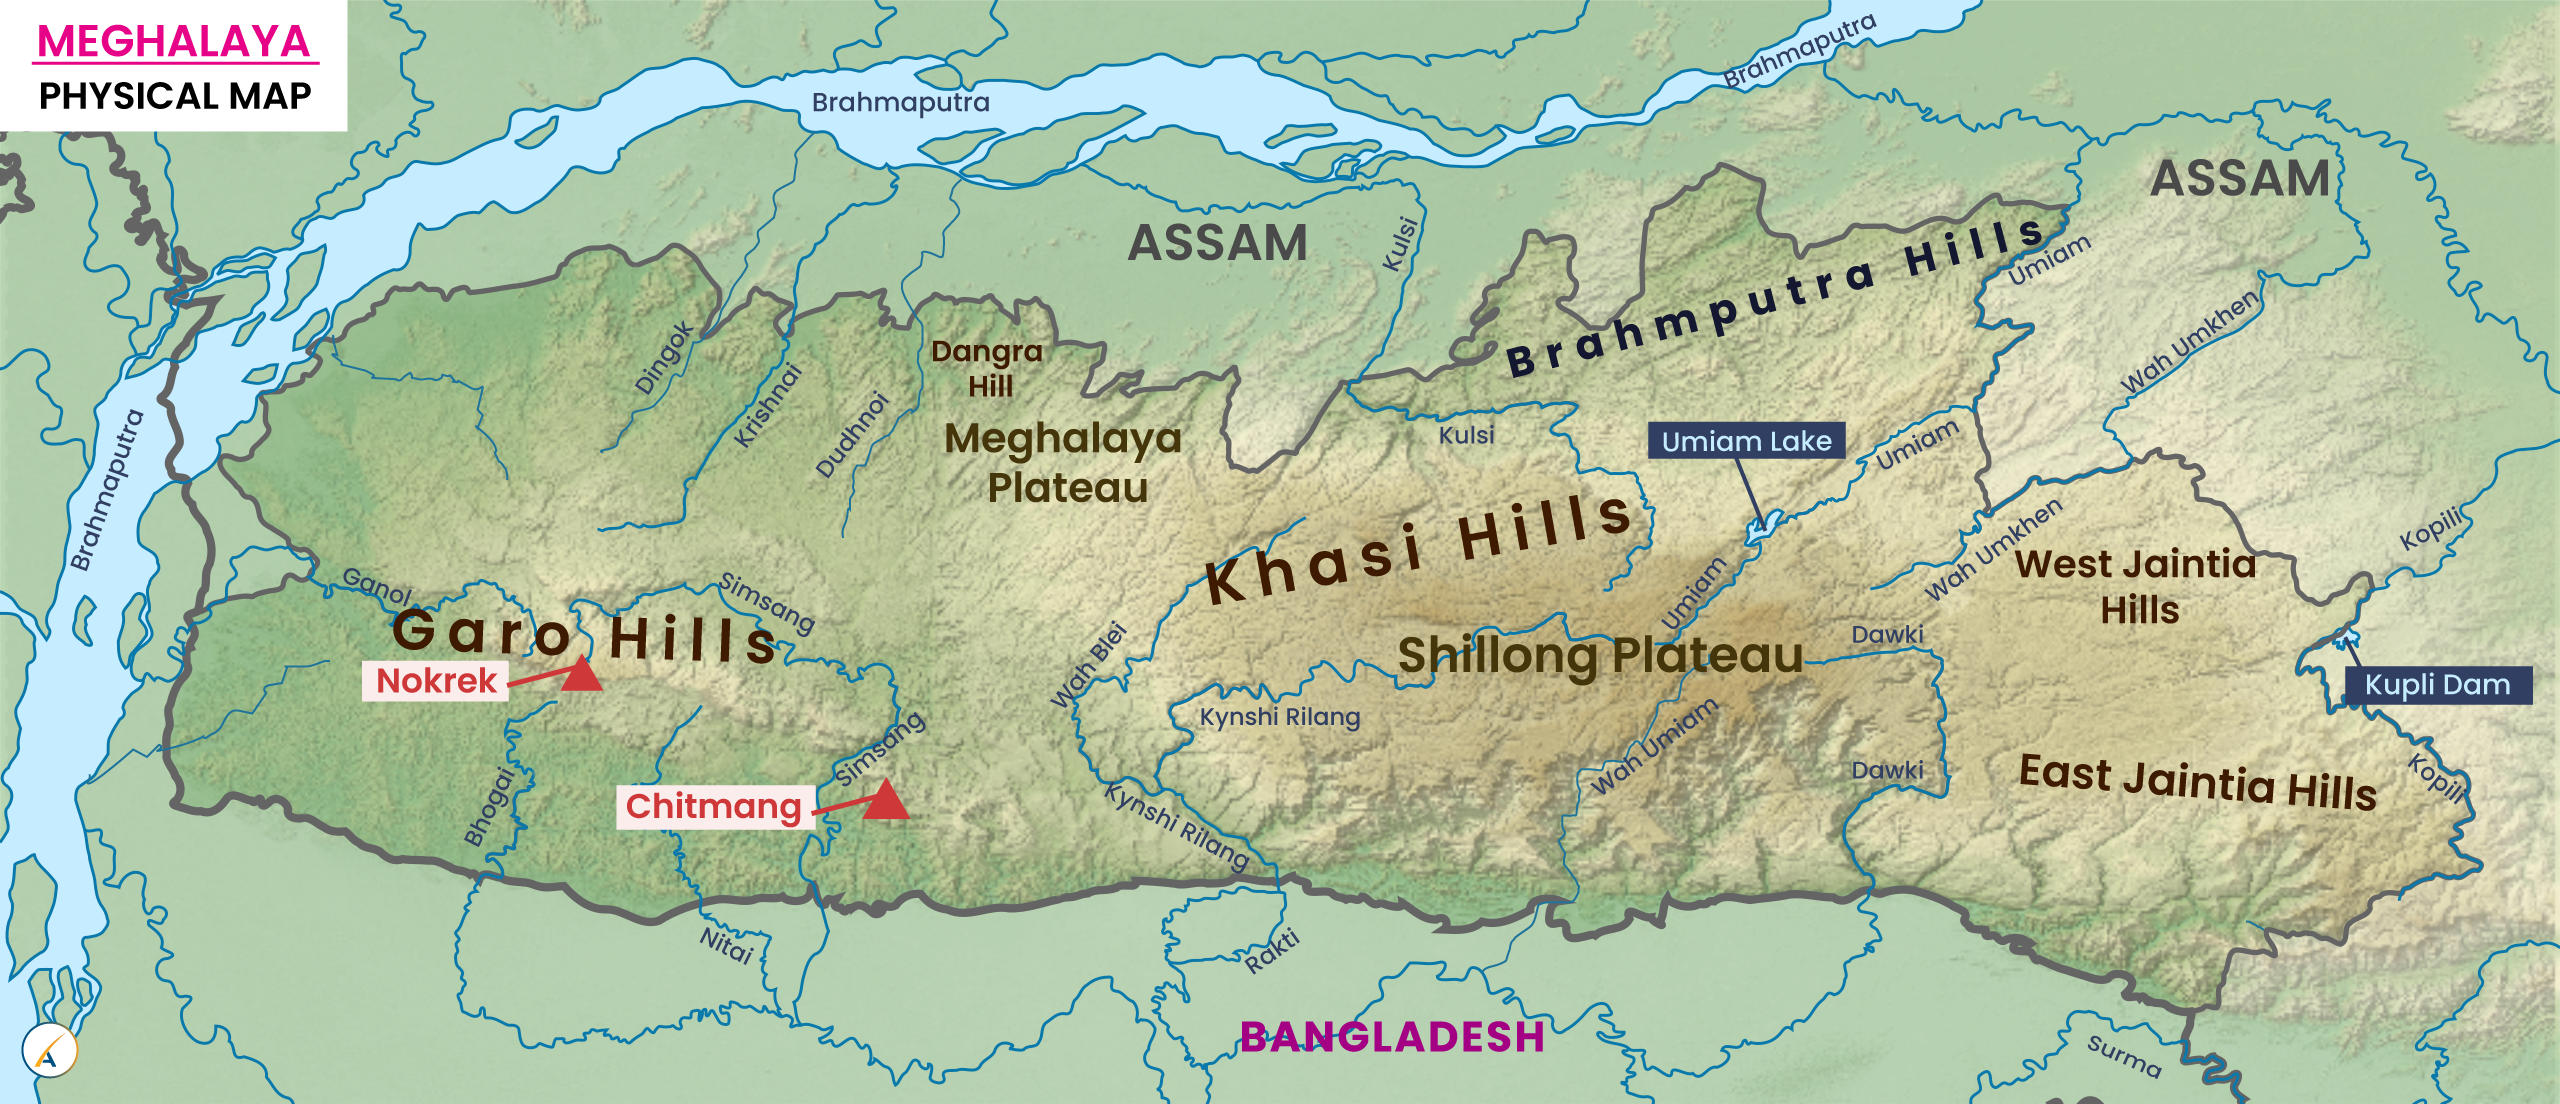 Meghalaya Physical Map